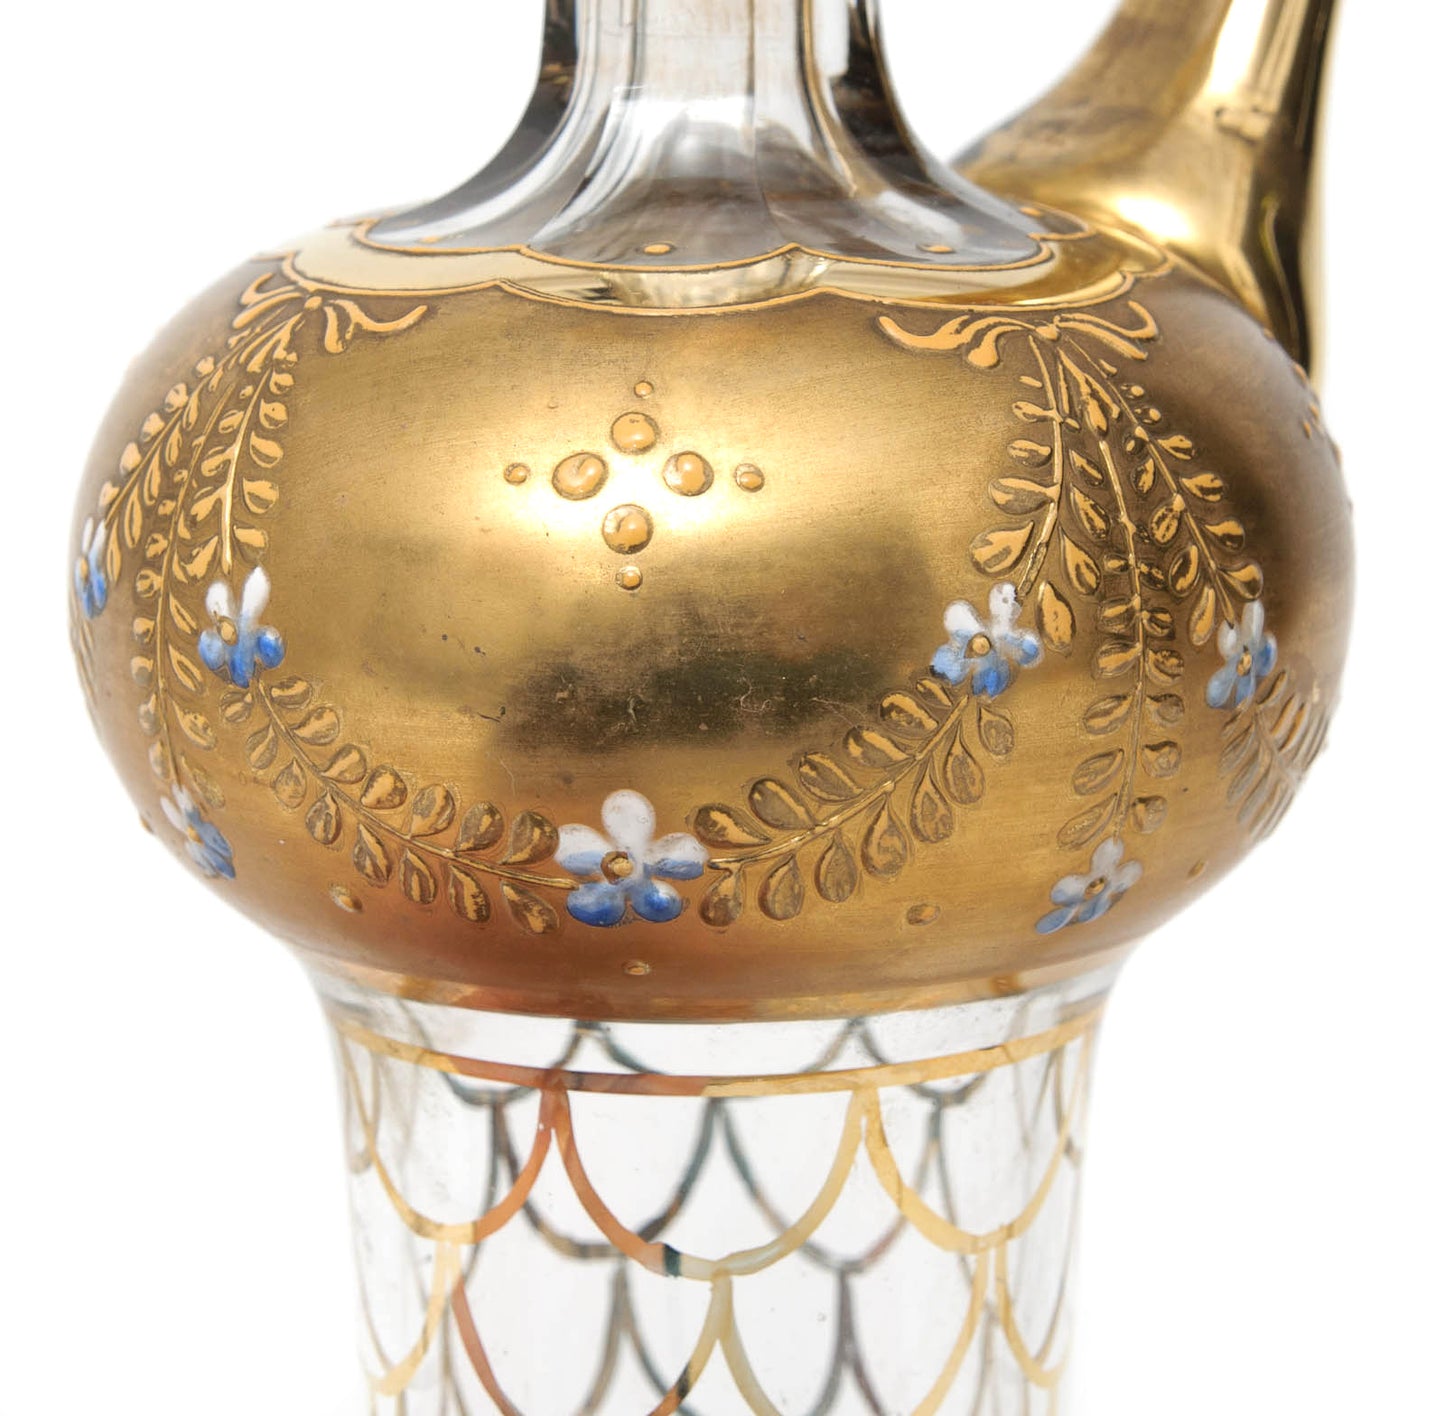 A Grand Antique Bohemian Liqueur Glass Set with Decanter, Glasses & Tray c1900 (Code 9129)